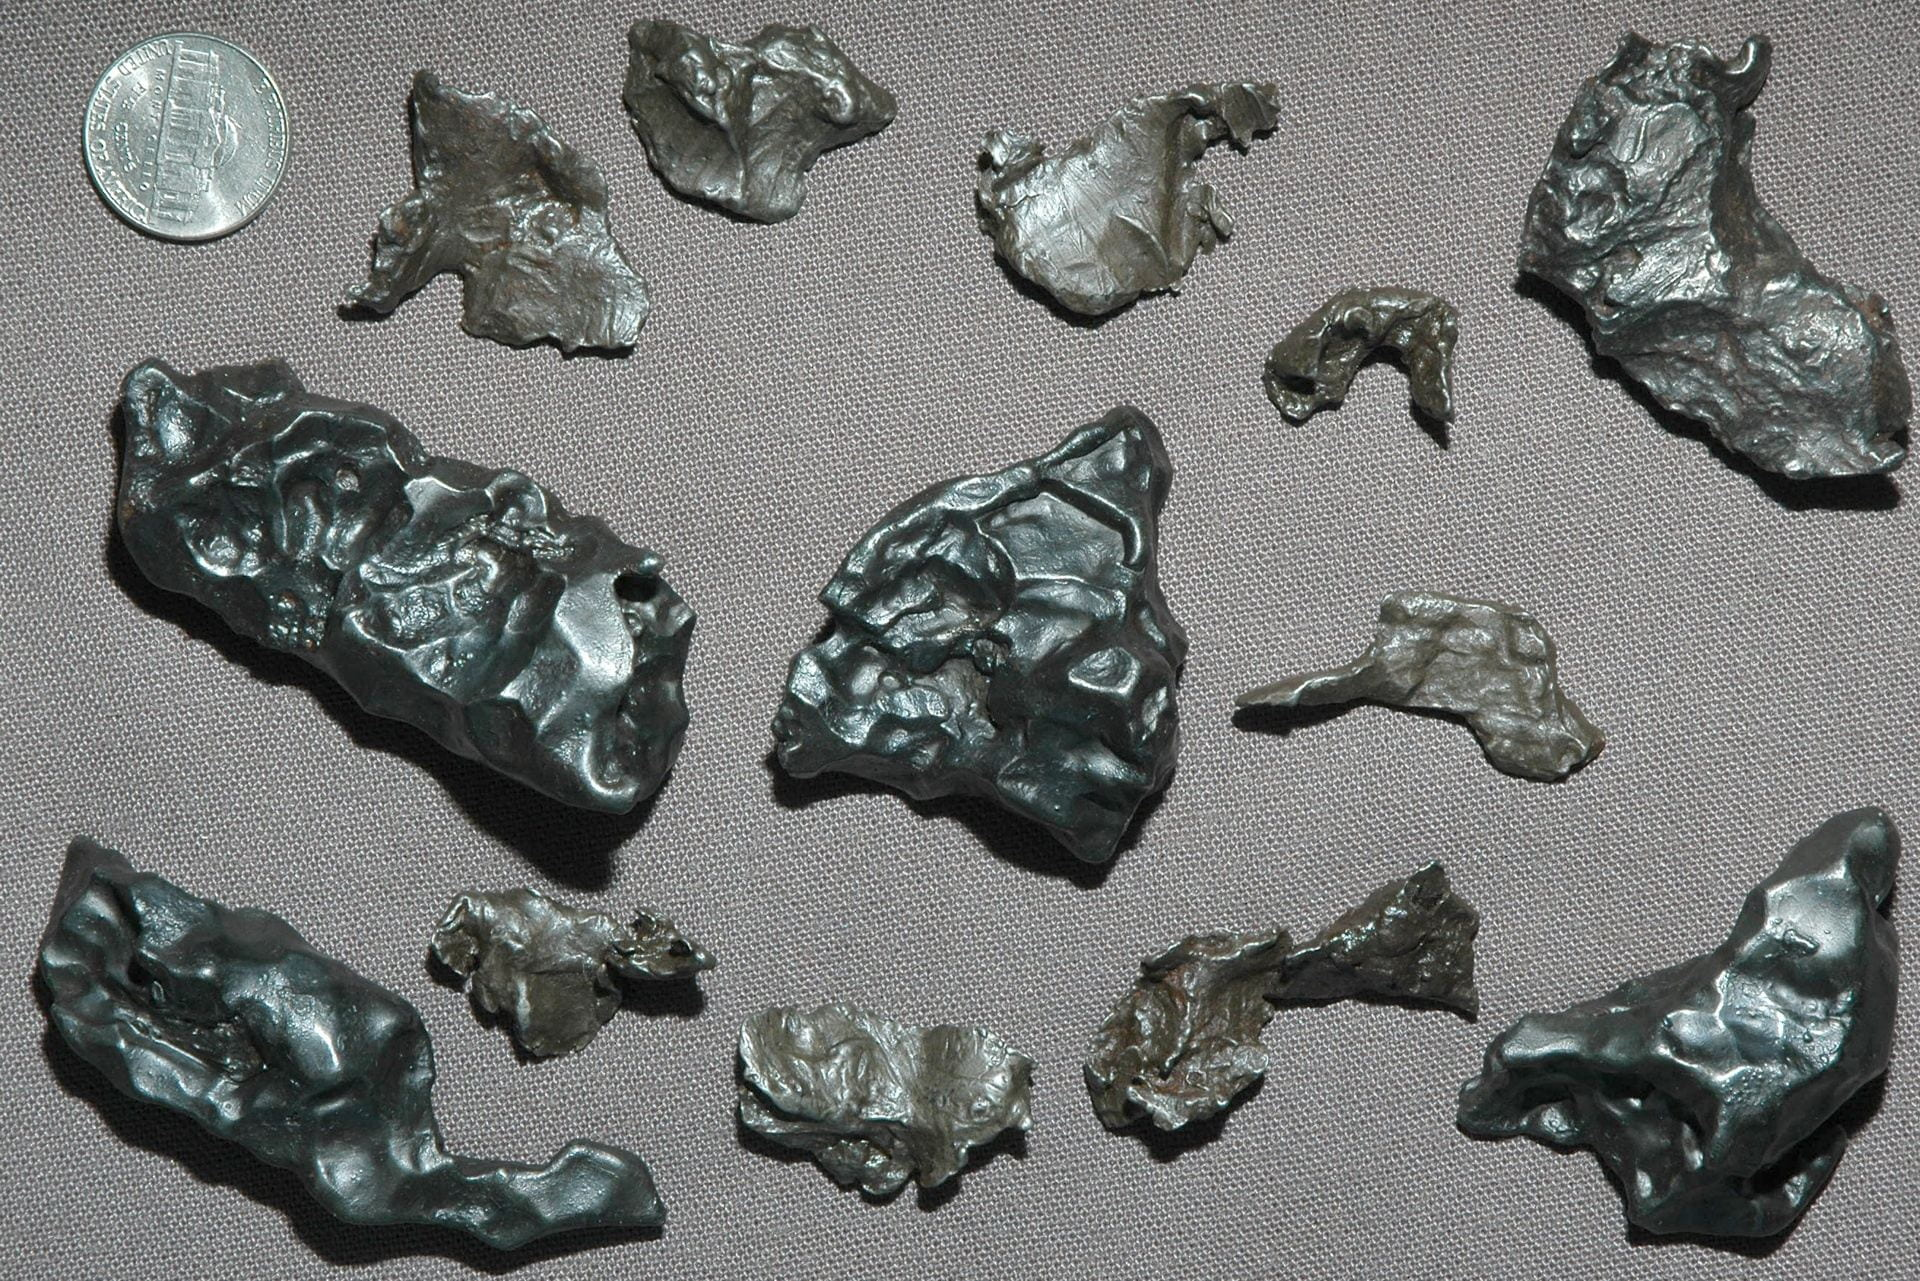 Металл железо известен человеку еще с глубокой. Металлический метеорит. Изучение метеоритов. Метеоритное железо. Железокаменные метеориты.